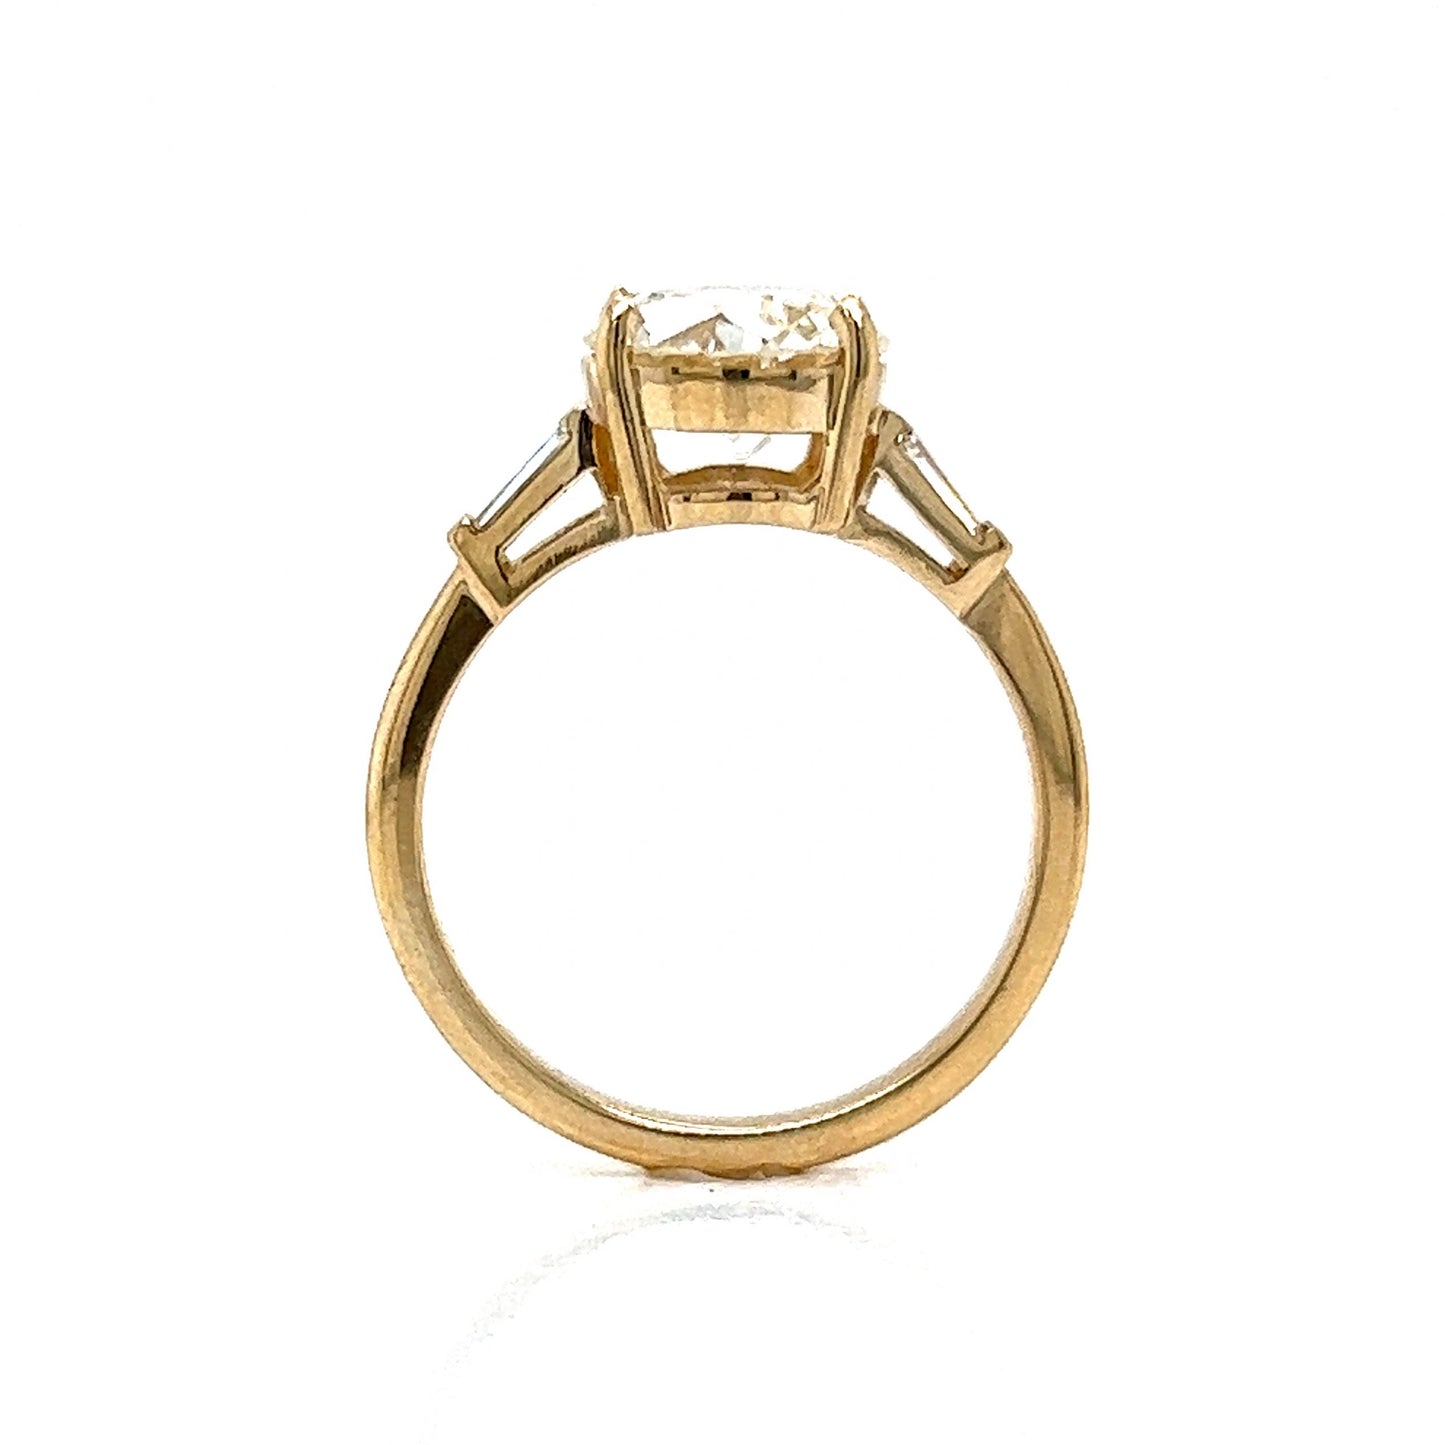 2.04 Old European Cut Diamond Engagement Ring in 14k Gold